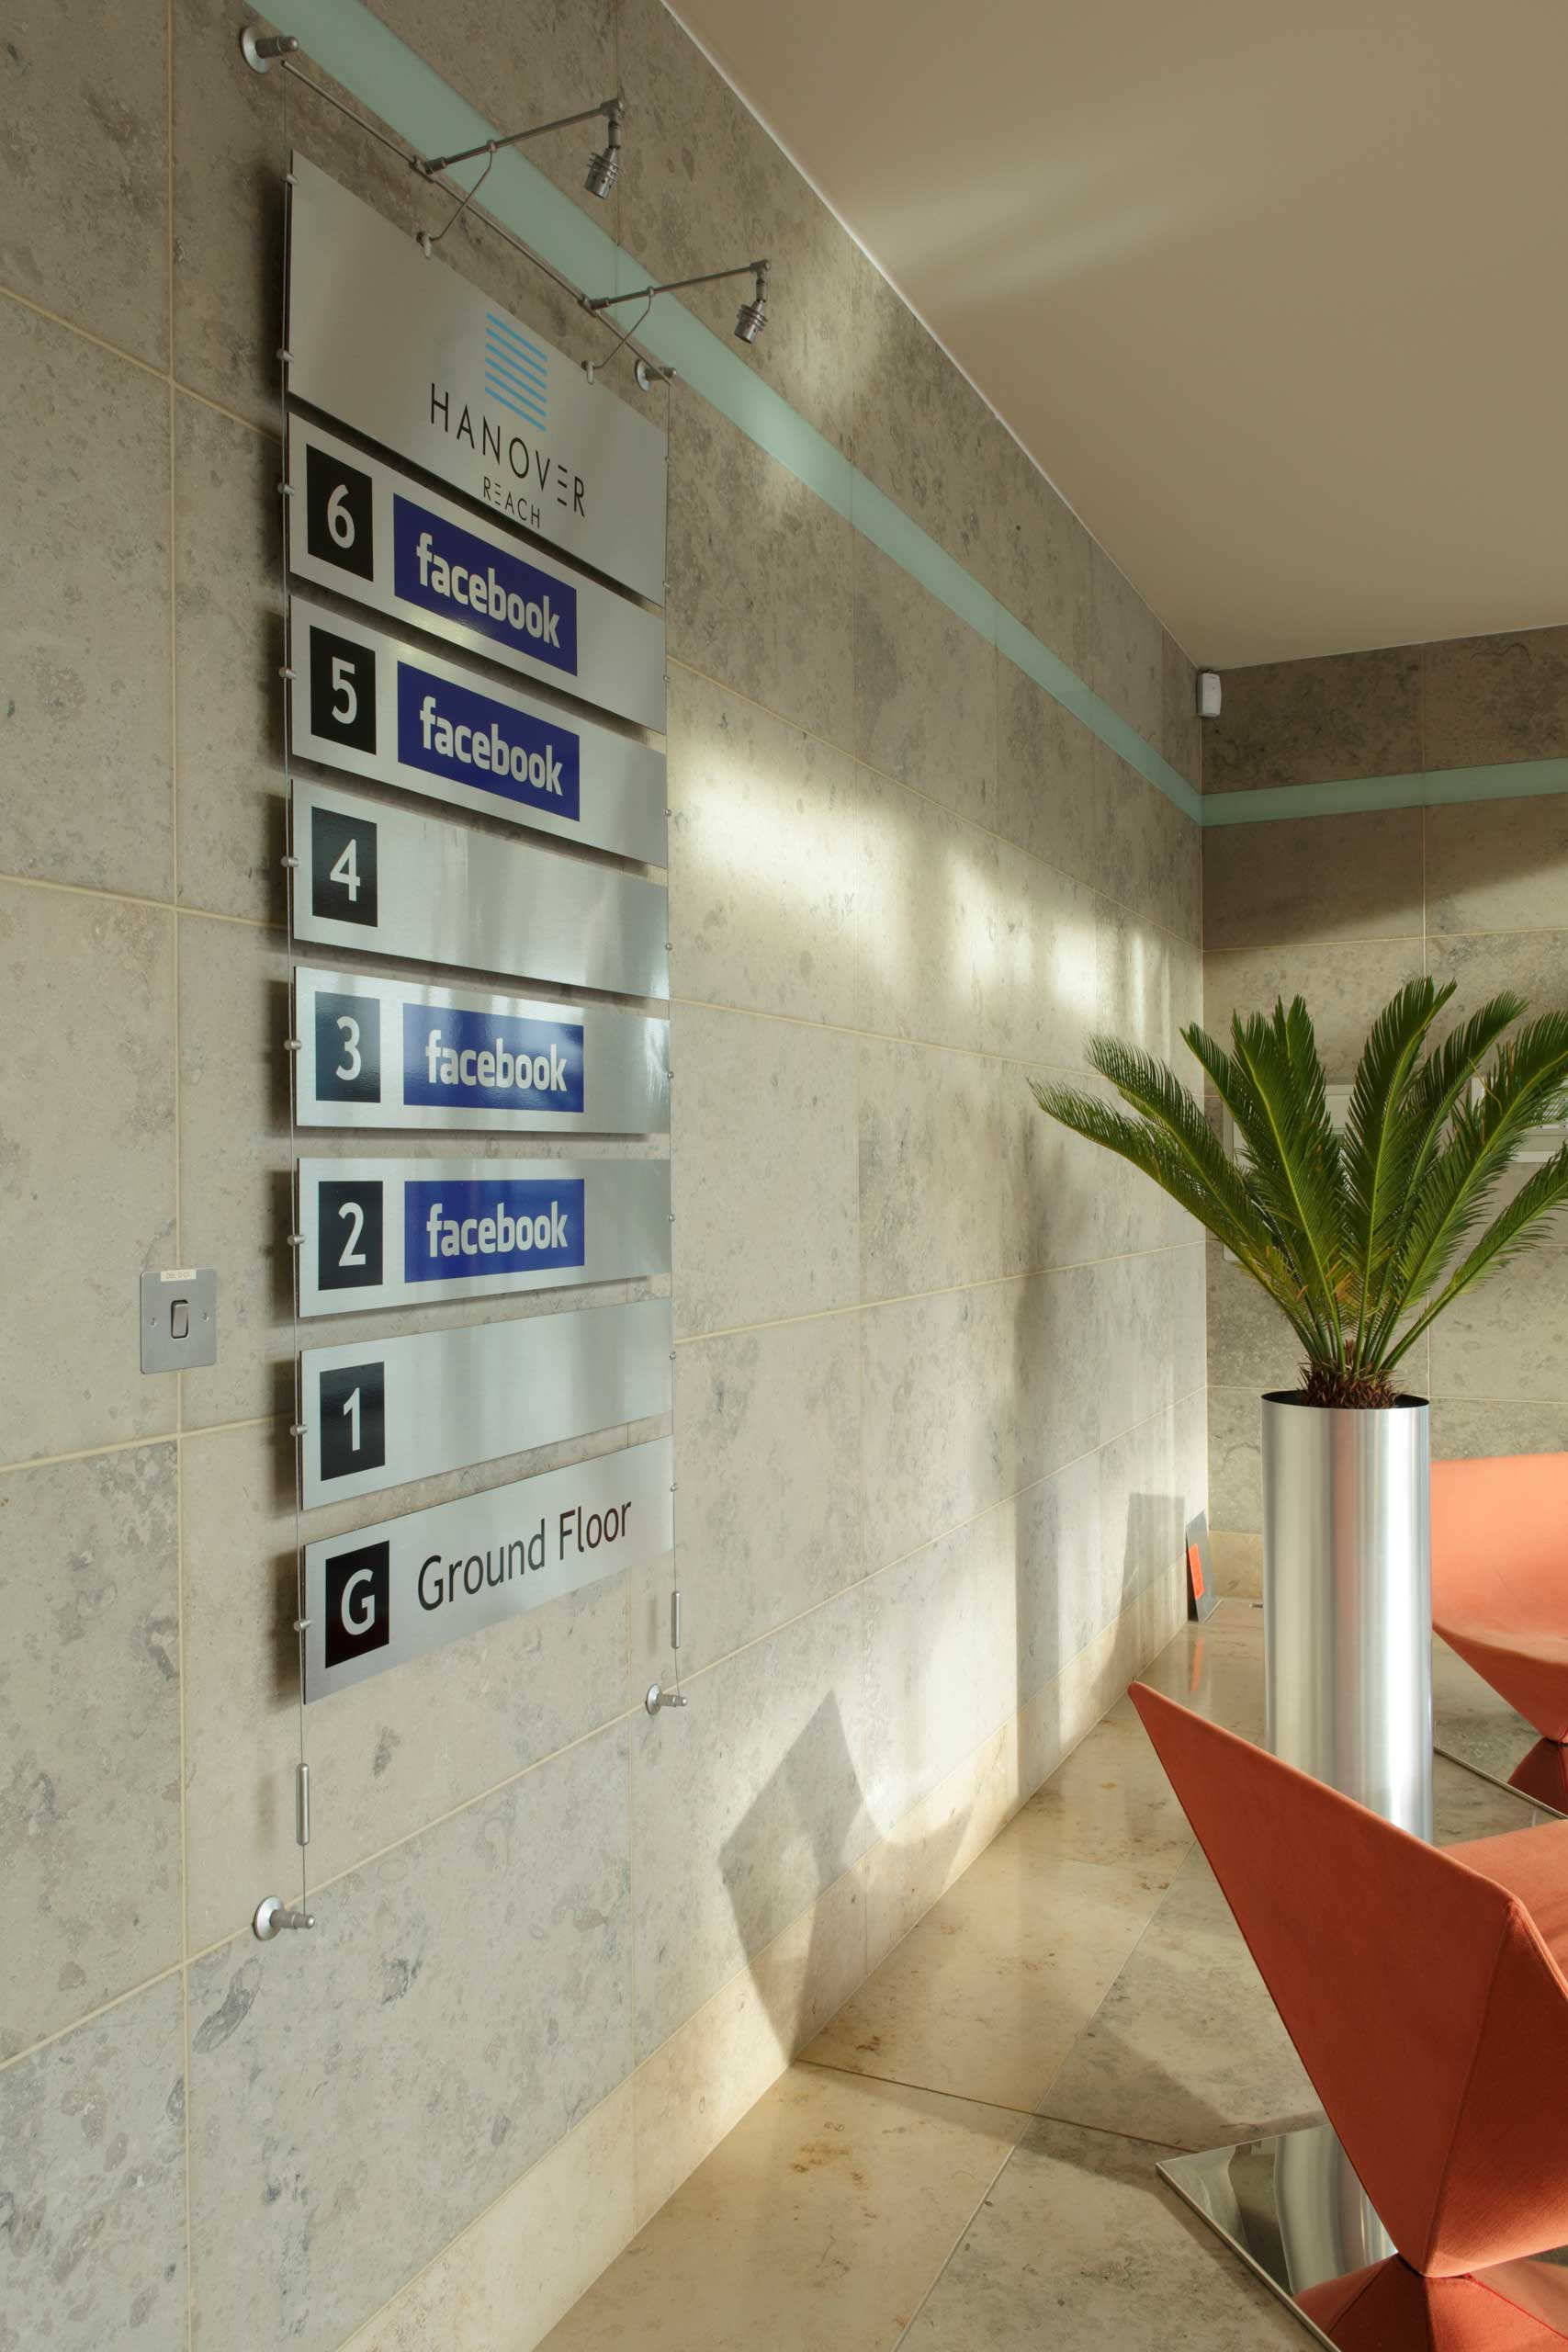 Facebook offices in Dublin, Ireland in 2010.